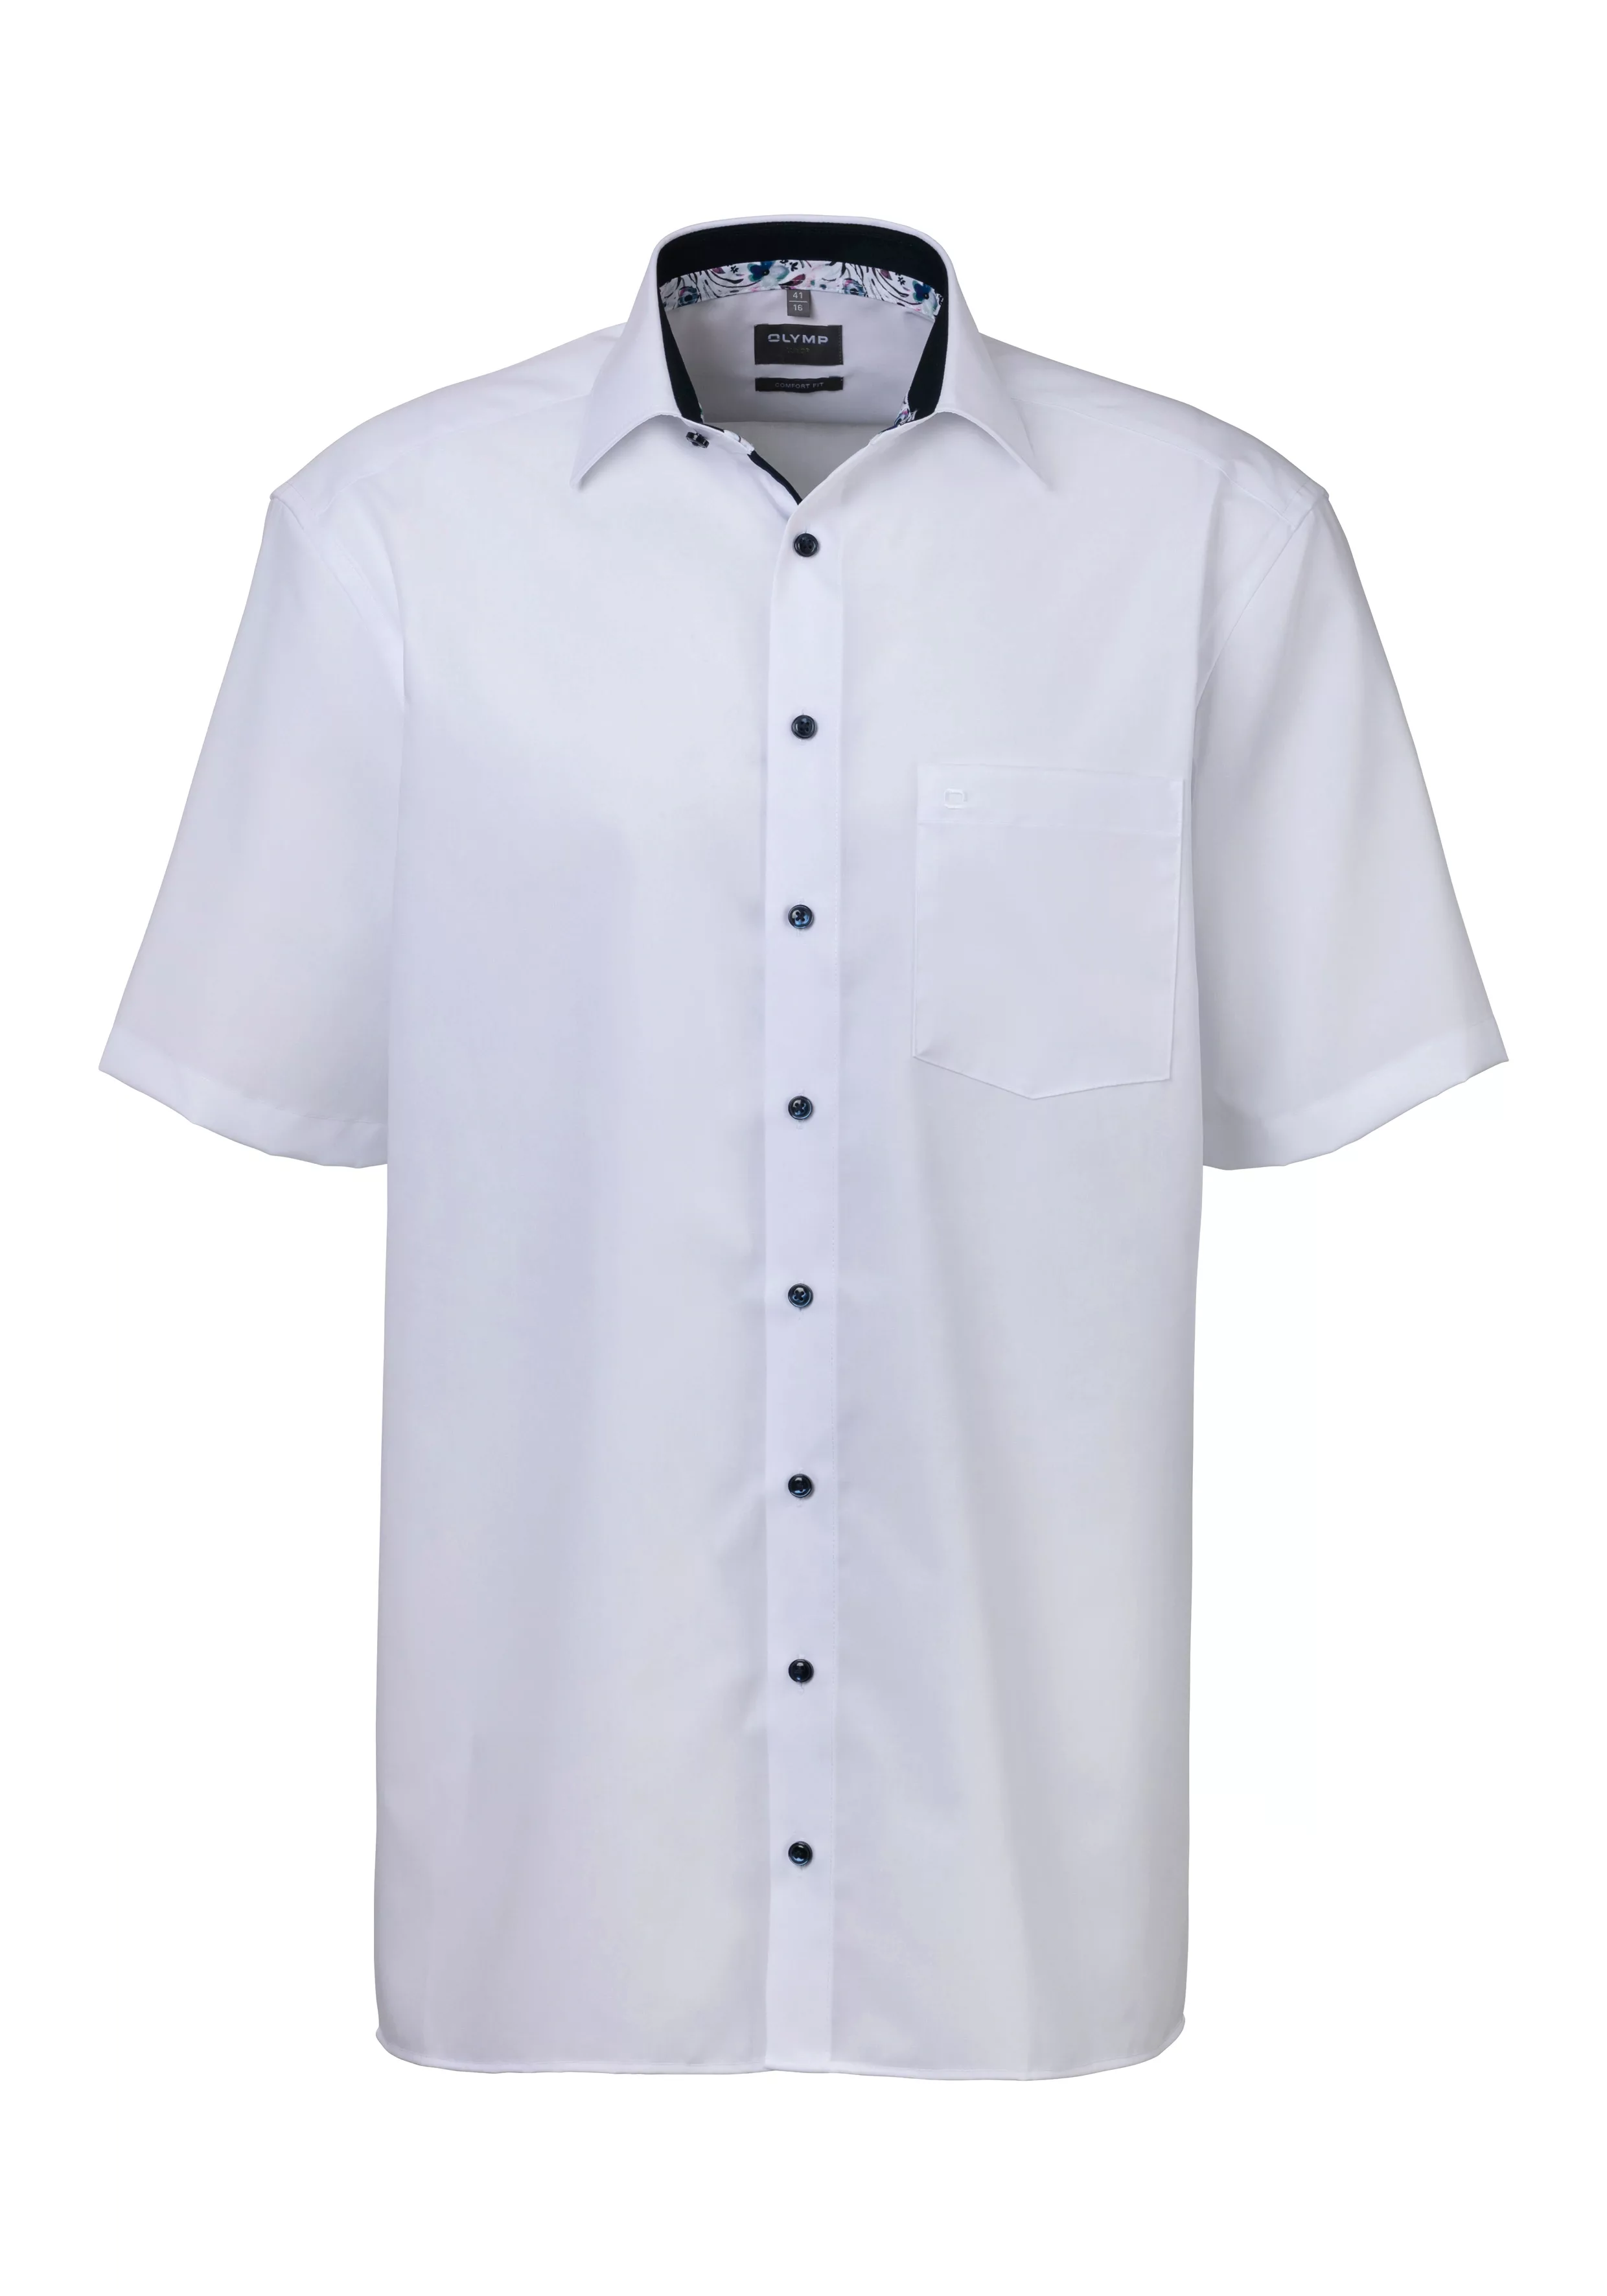 OLYMP Kurzarmhemd "Luxor Comfort Fit", atmungsaktiv, bügelfrei günstig online kaufen